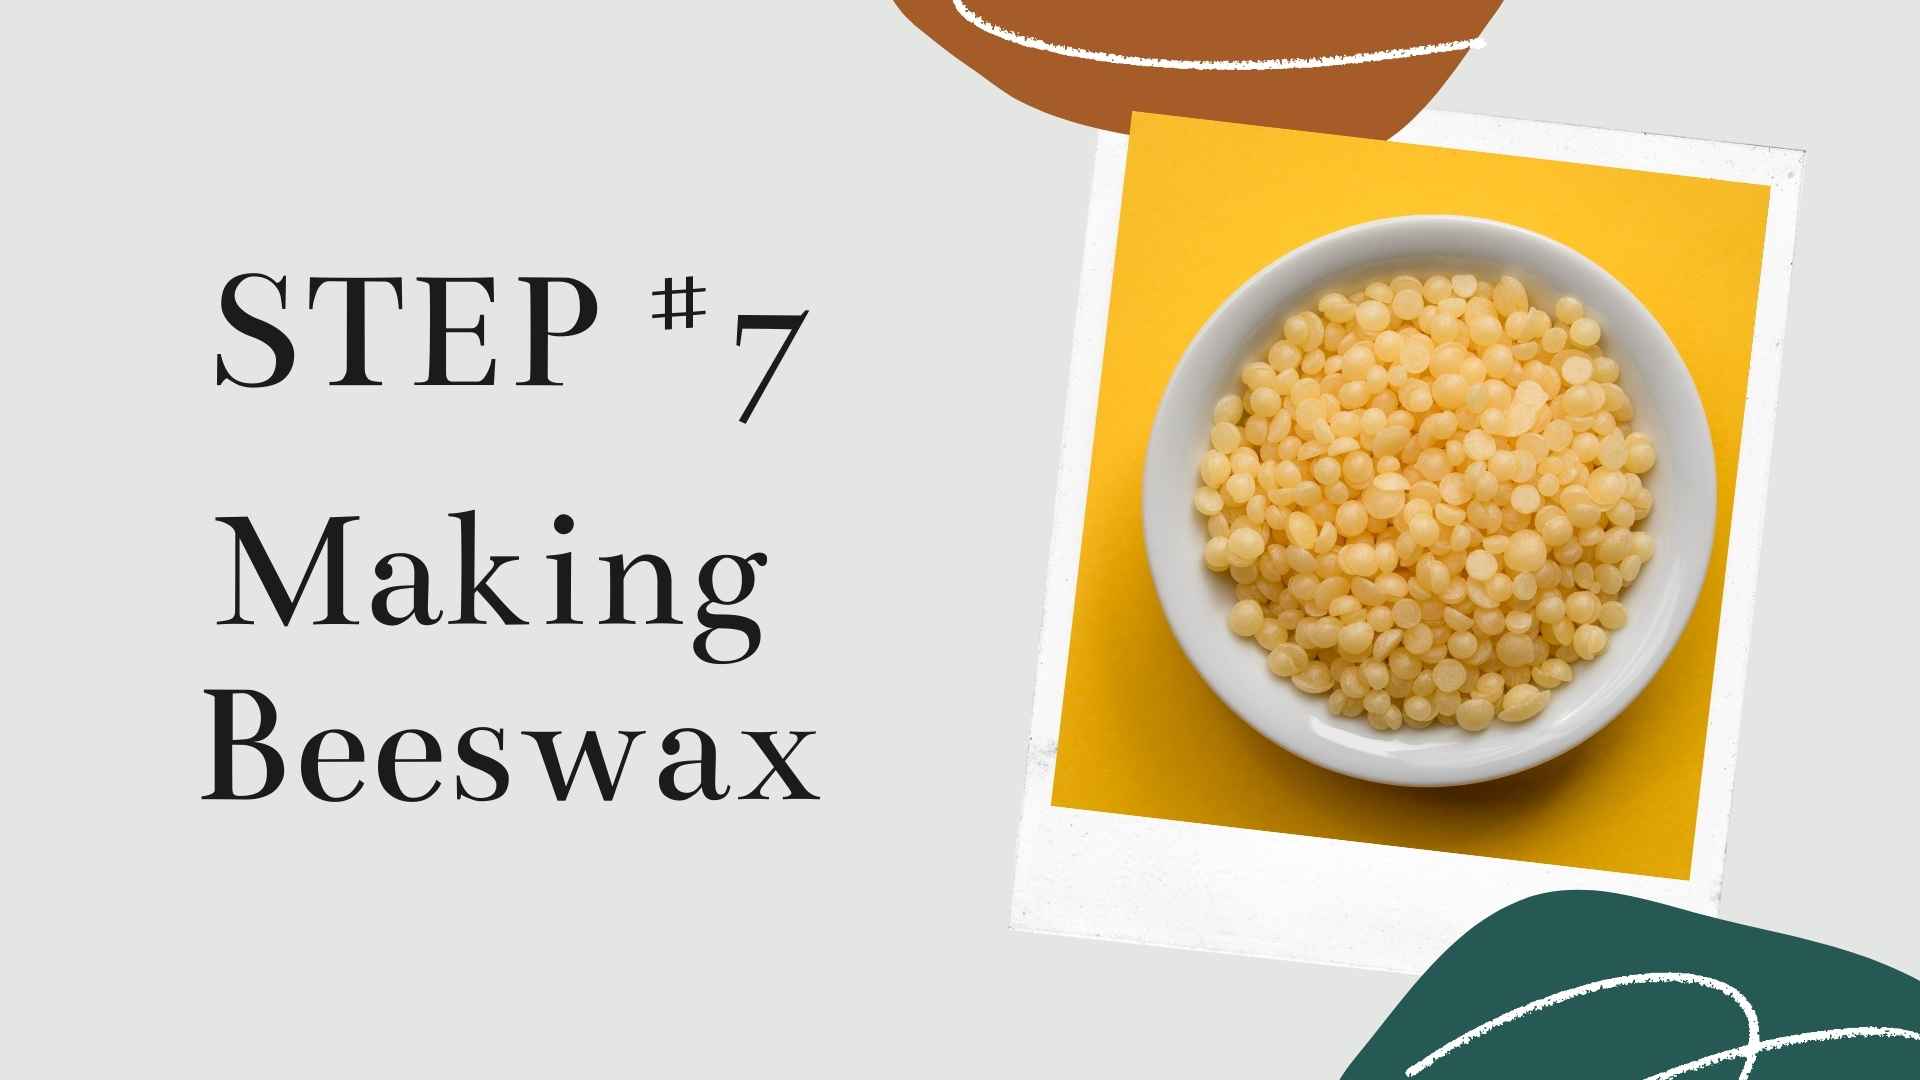 Step #7 Making Beeswax! 